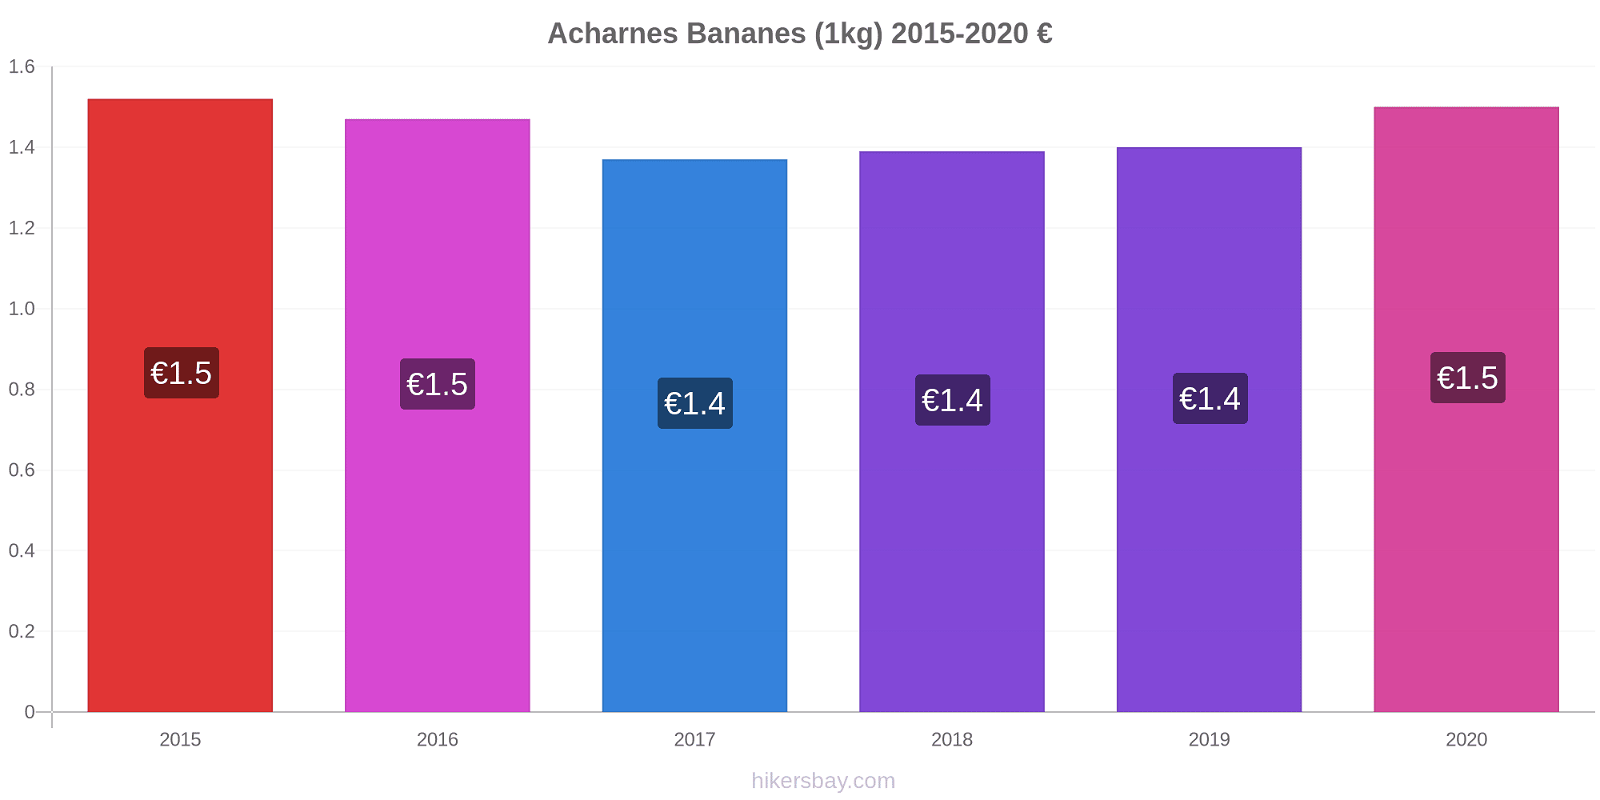 Acharnes changements de prix Bananes (1kg) hikersbay.com